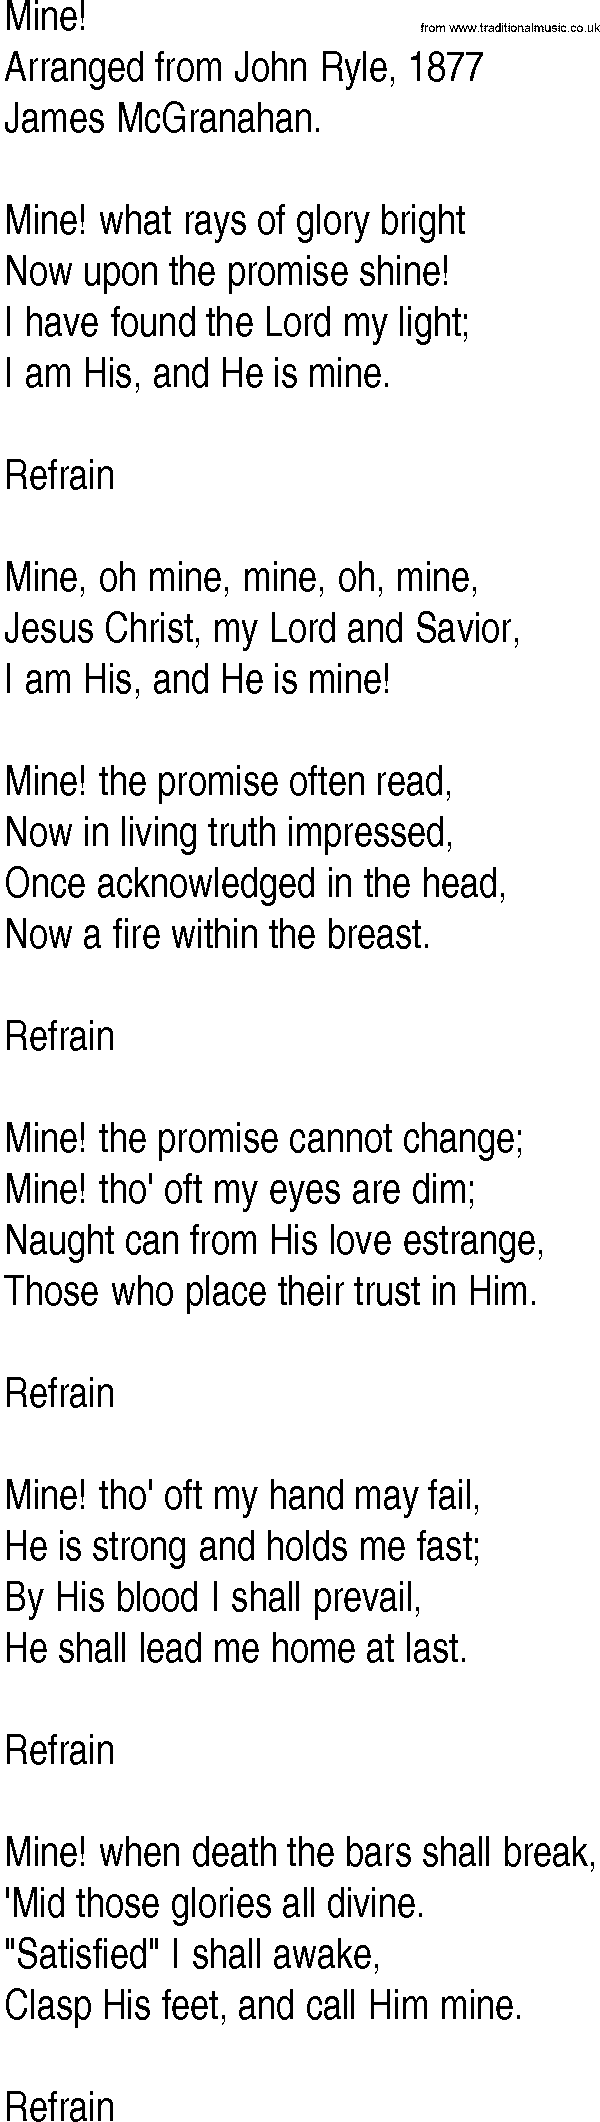 Hymn and Gospel Song: Mine! by Arranged from John Ryle lyrics